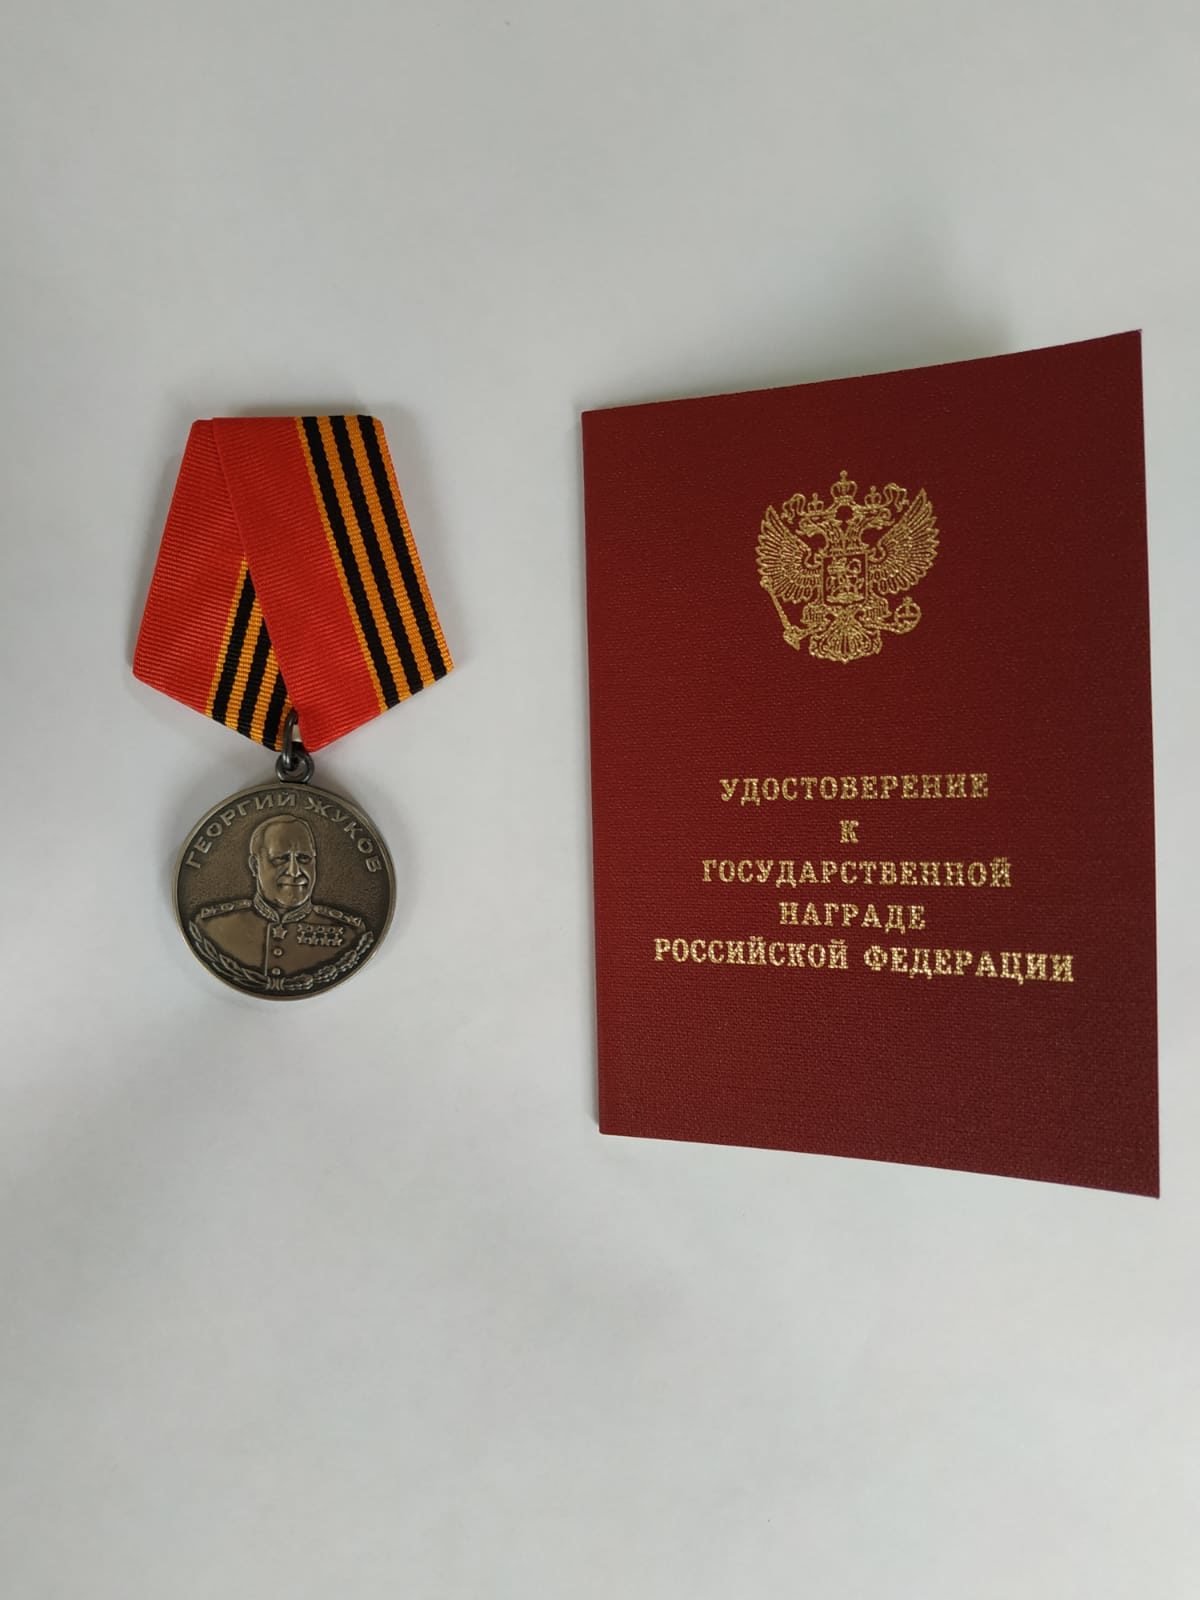 медаль жукова фото с двух сторон